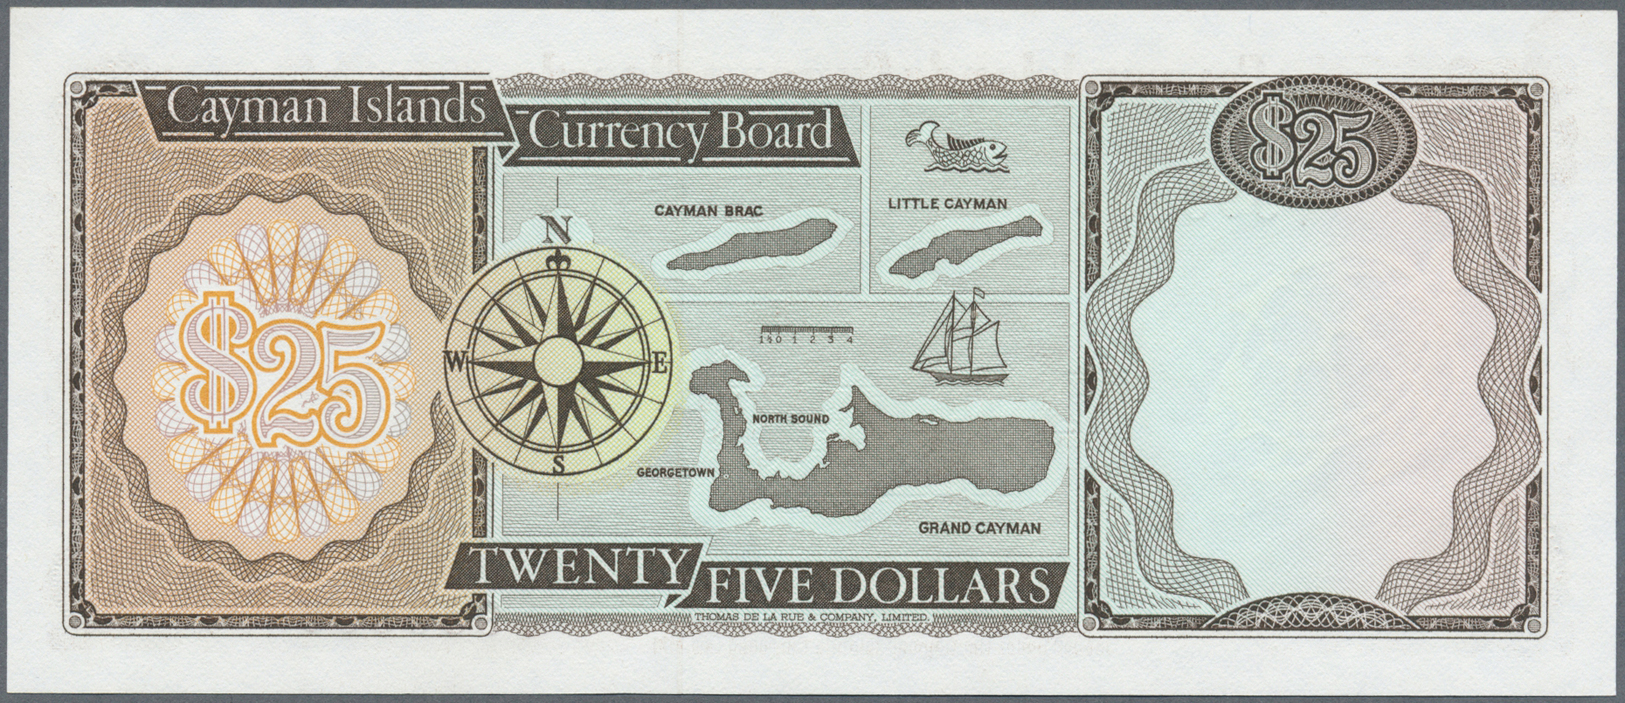 00508 Cayman Islands: 25 Dollars L.1974 P. 8 In Condition: AUNC. - Cayman Islands